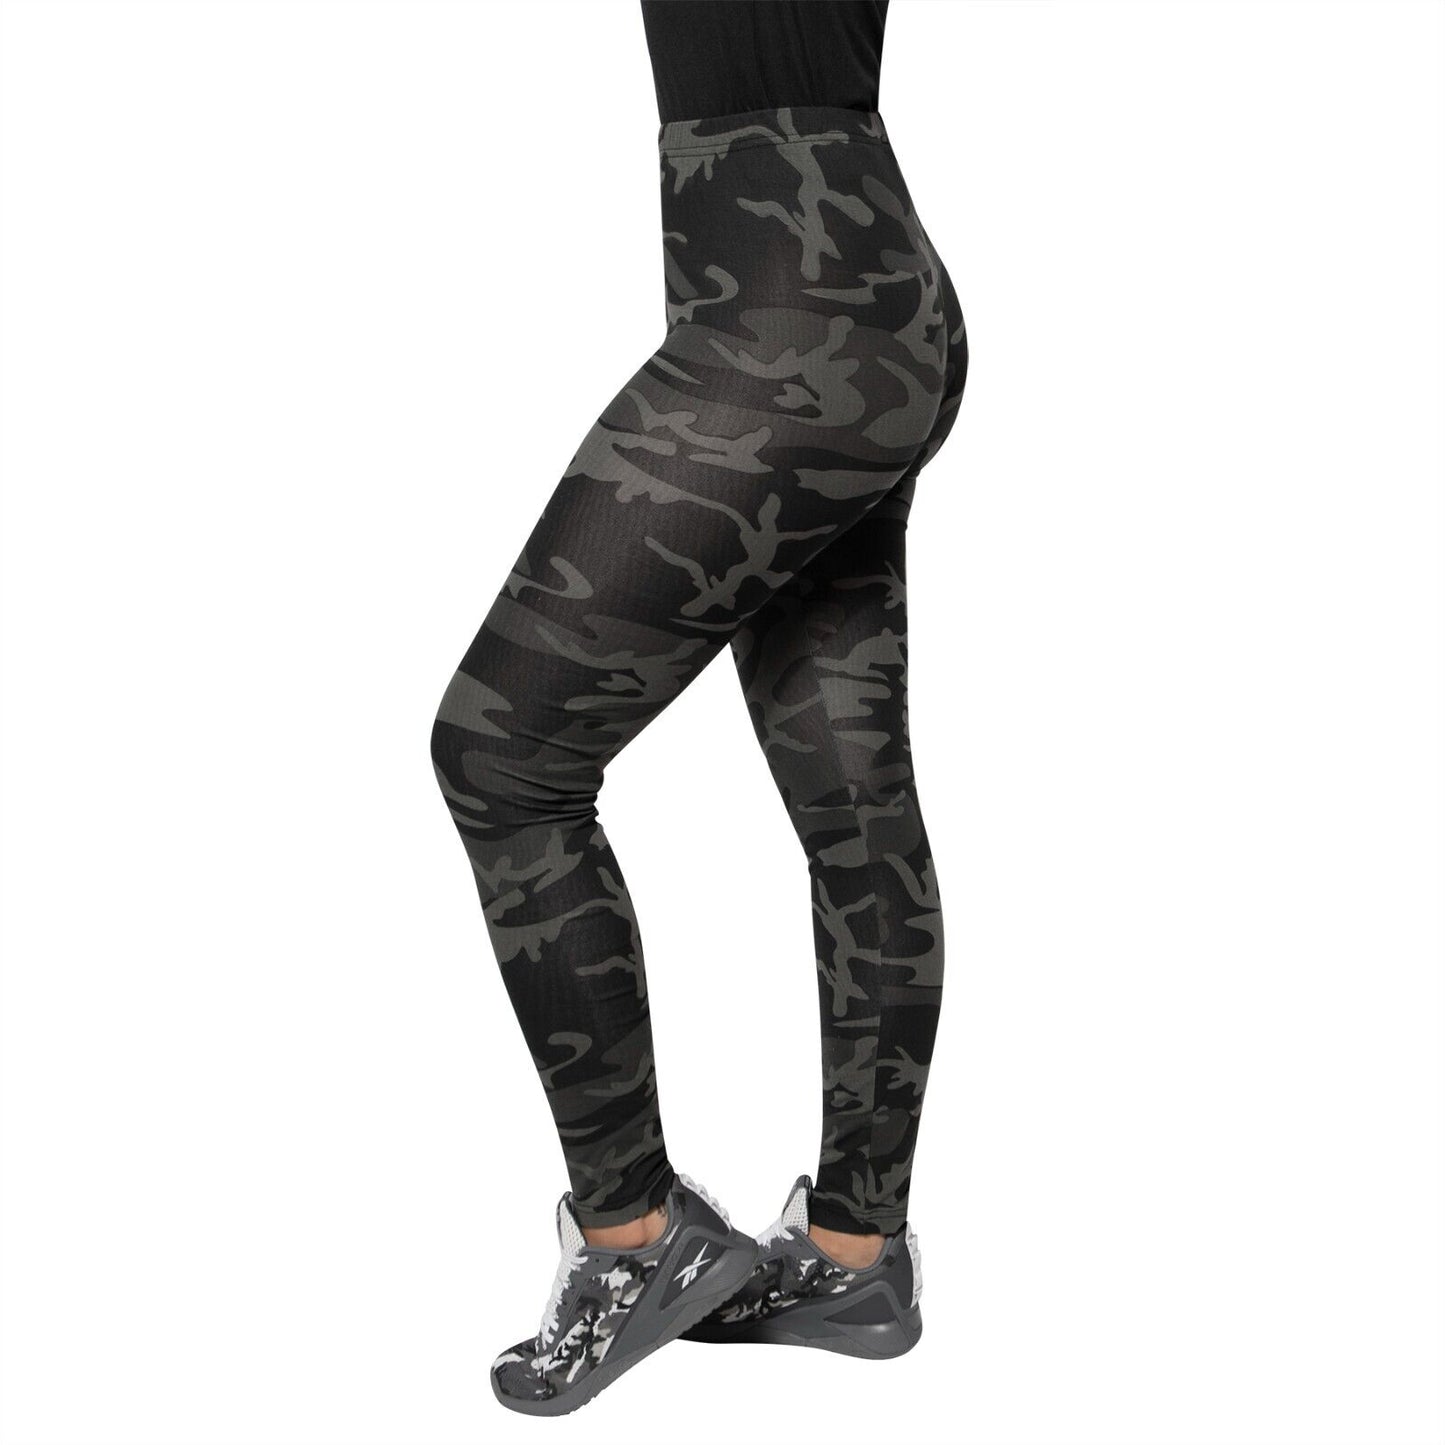 Womens Black Camo Leggings Super Soft Form Fitting